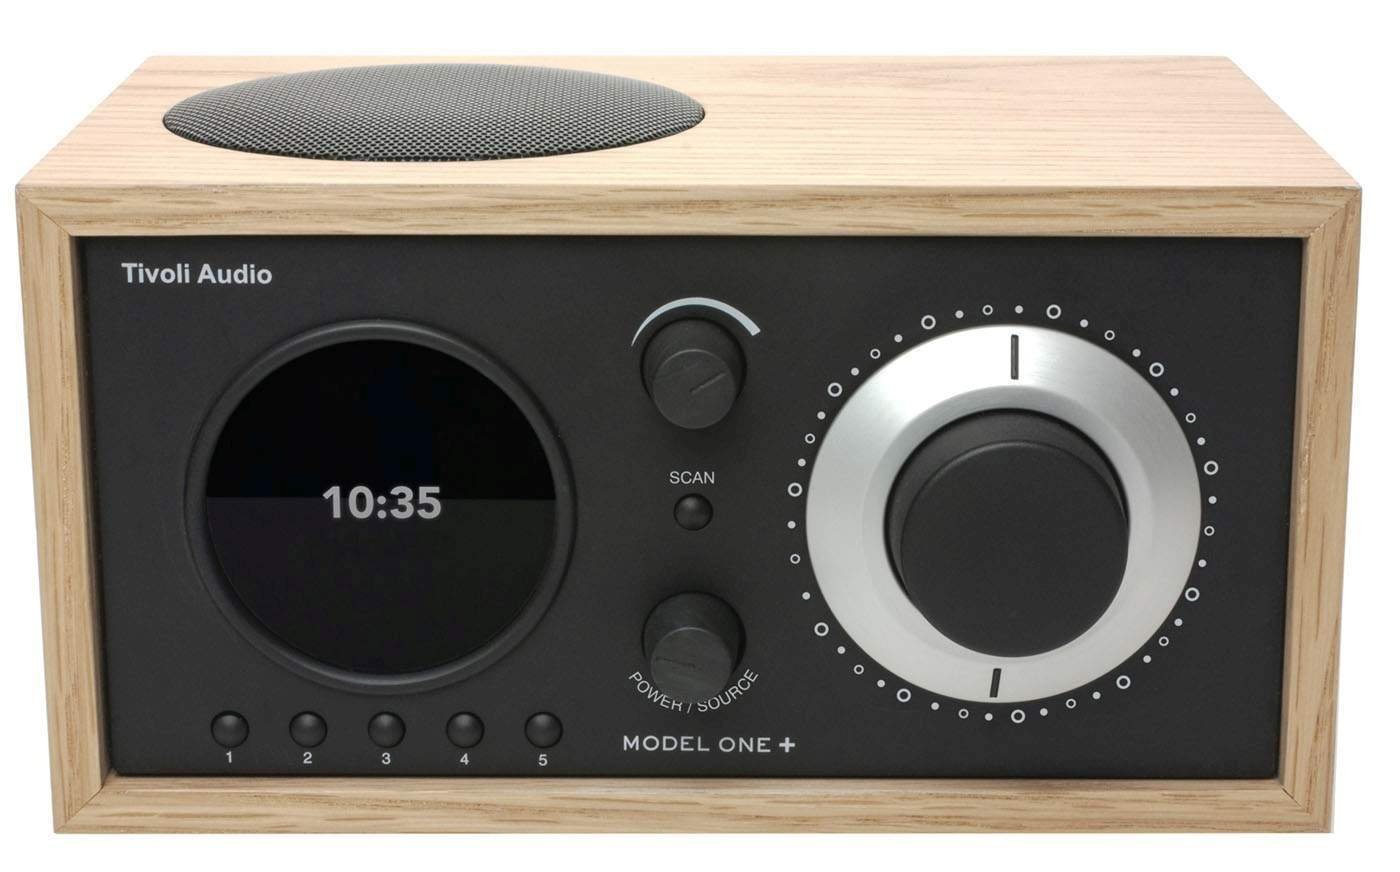 Tivoli Audio Model ONE+ Eiche/schwarz Digitalradio (DAB) (Digitalradio (DAB),FM-Tuner, Wecker, DAB+ und FM-Tuner, Bluetooth, Fernbedienung) von Tivoli Audio